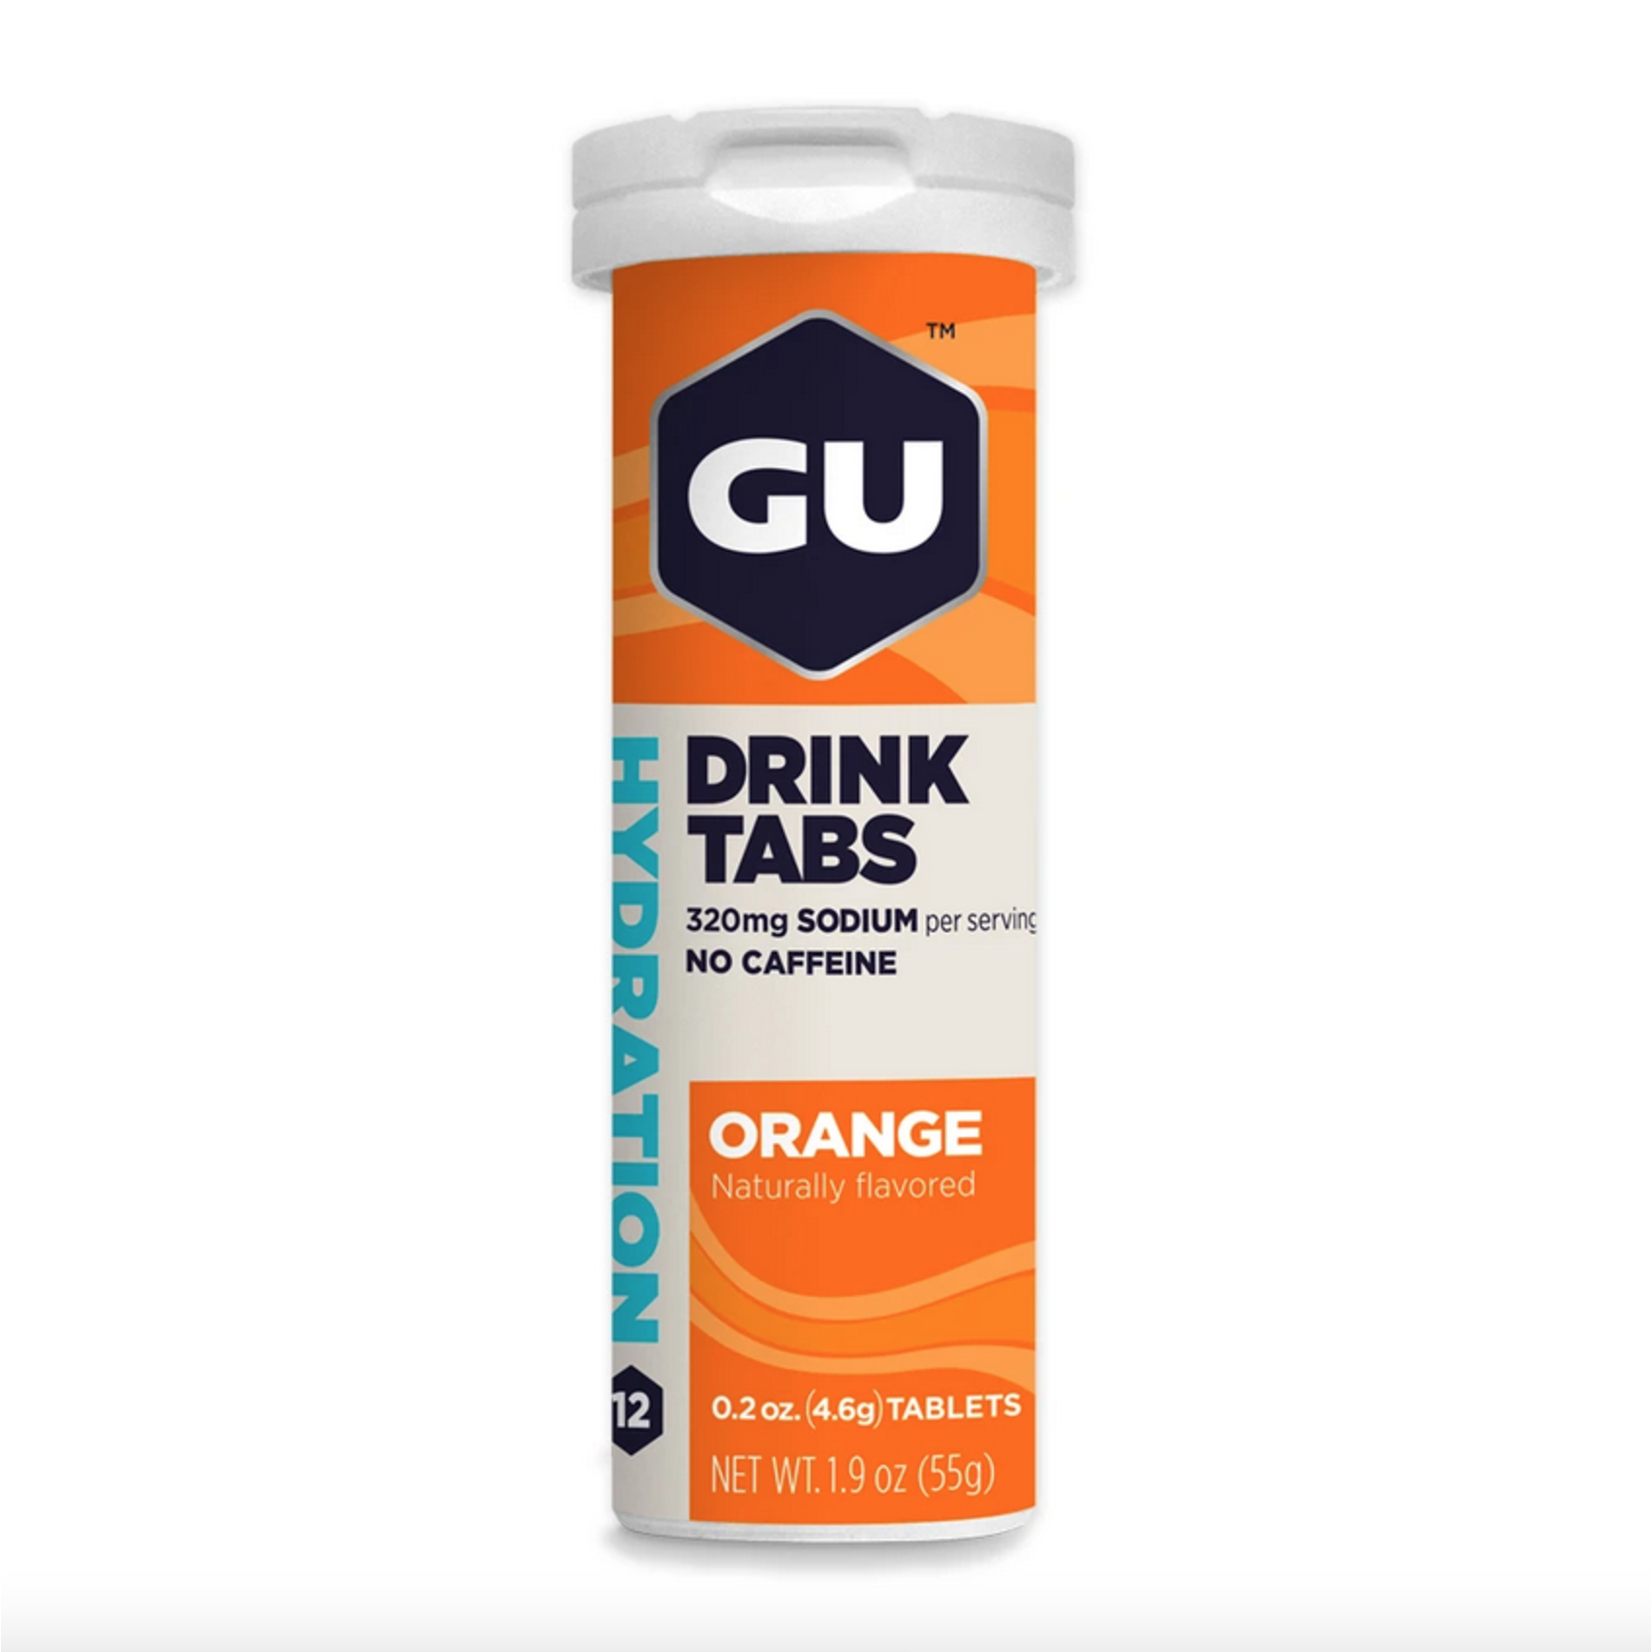 GU Hydration Drink Tablets, Orange single